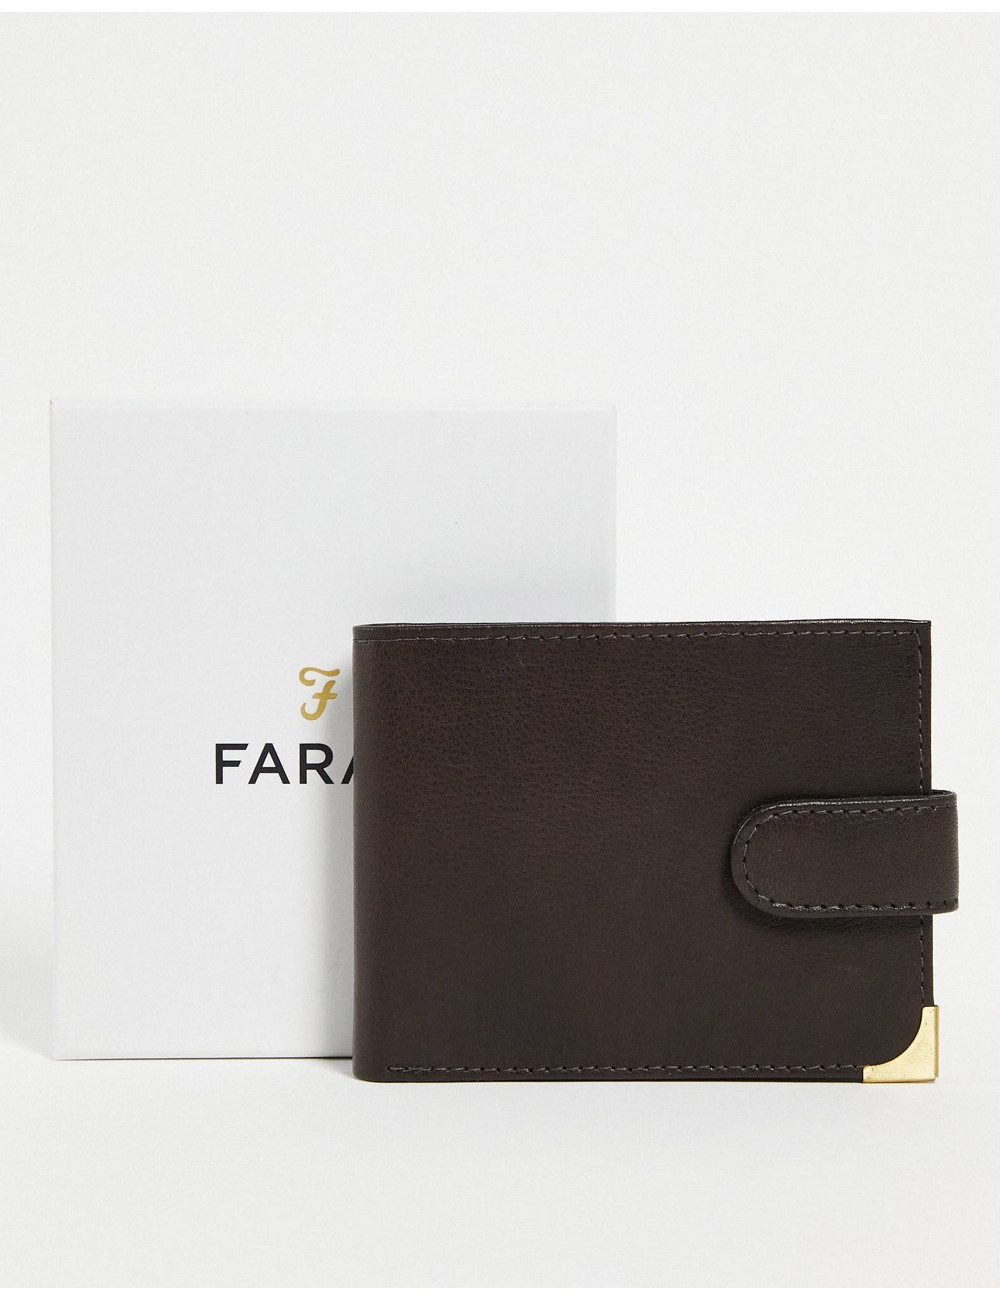 Farah bifold wallet in brown